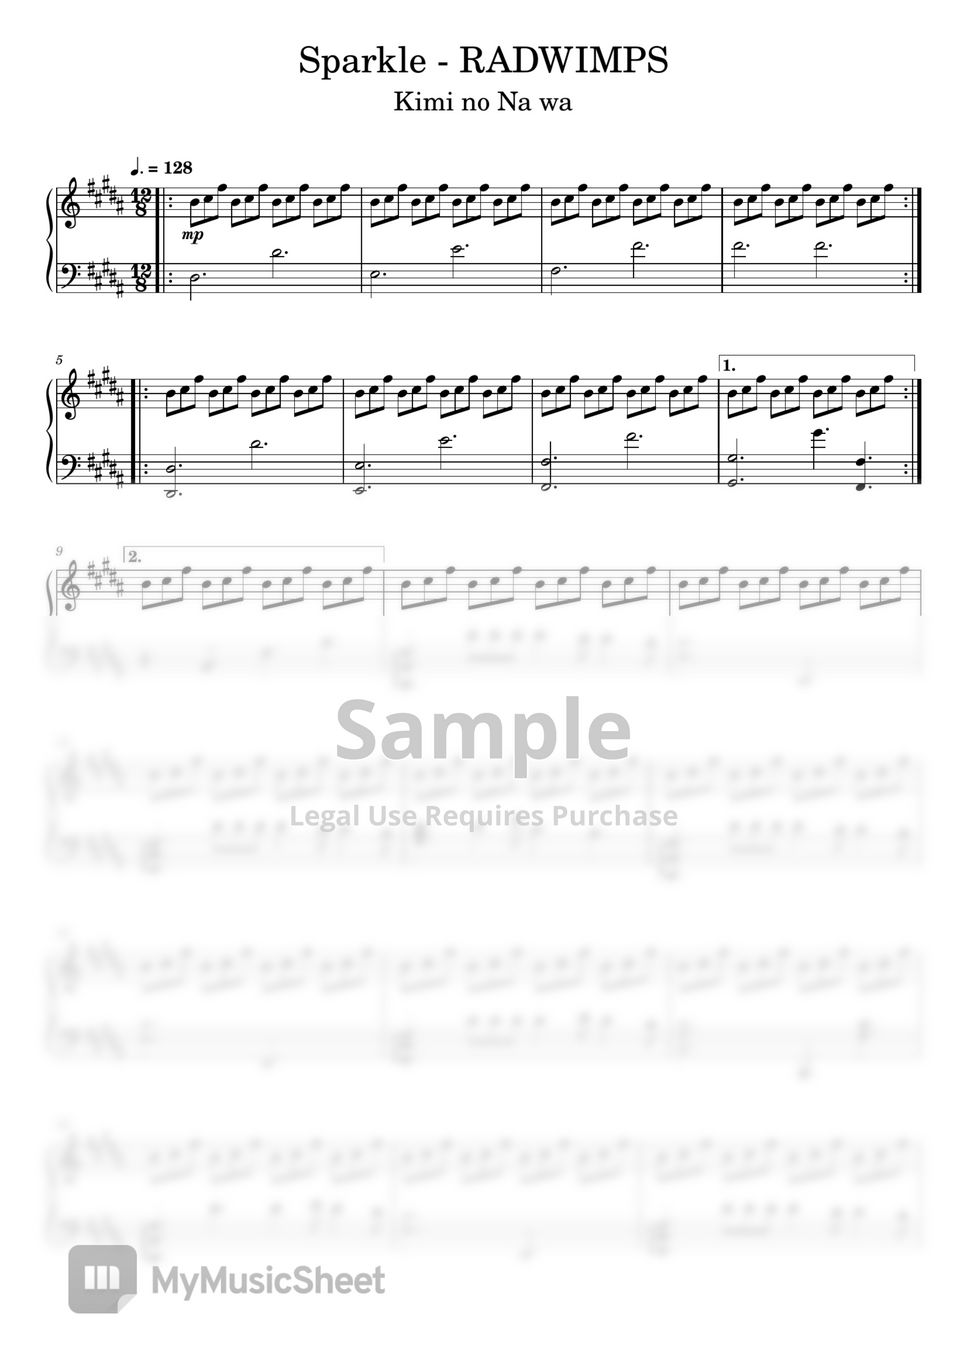 RADWIMPS - Sparkle - RADWIMPS (Kimi no Na wa/Your Name) Piano by BWC Piano Tutorial